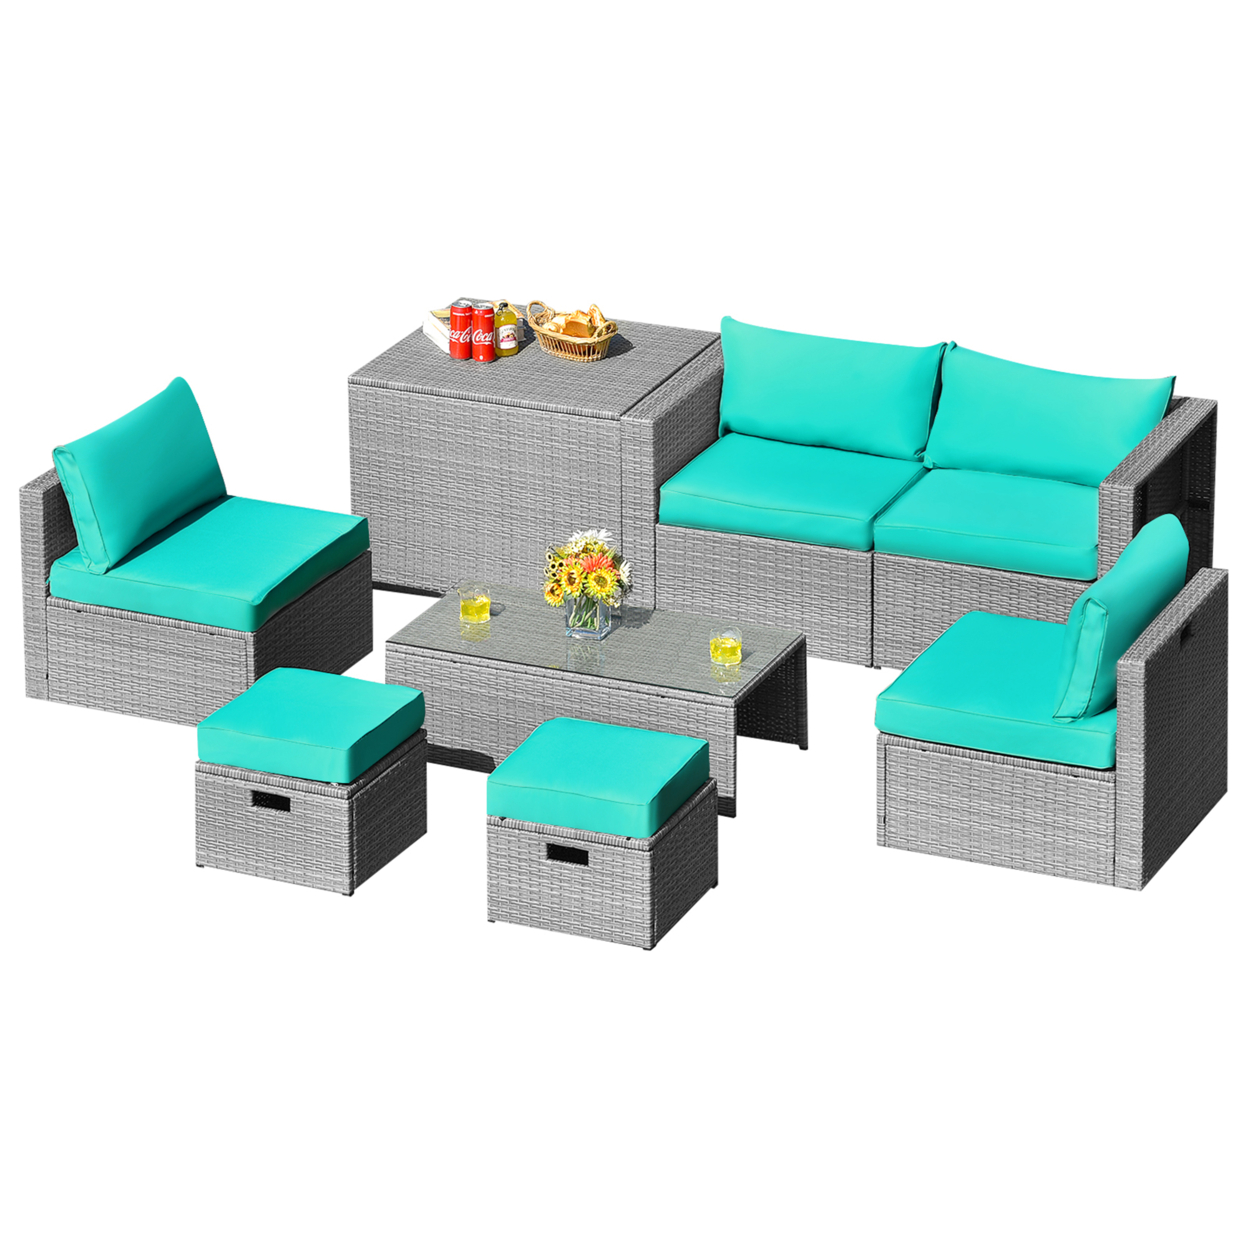 8PCS Rattan Patio Space-Saving Furniture Set W/ Waterproof Cover & Turquoise Cushions